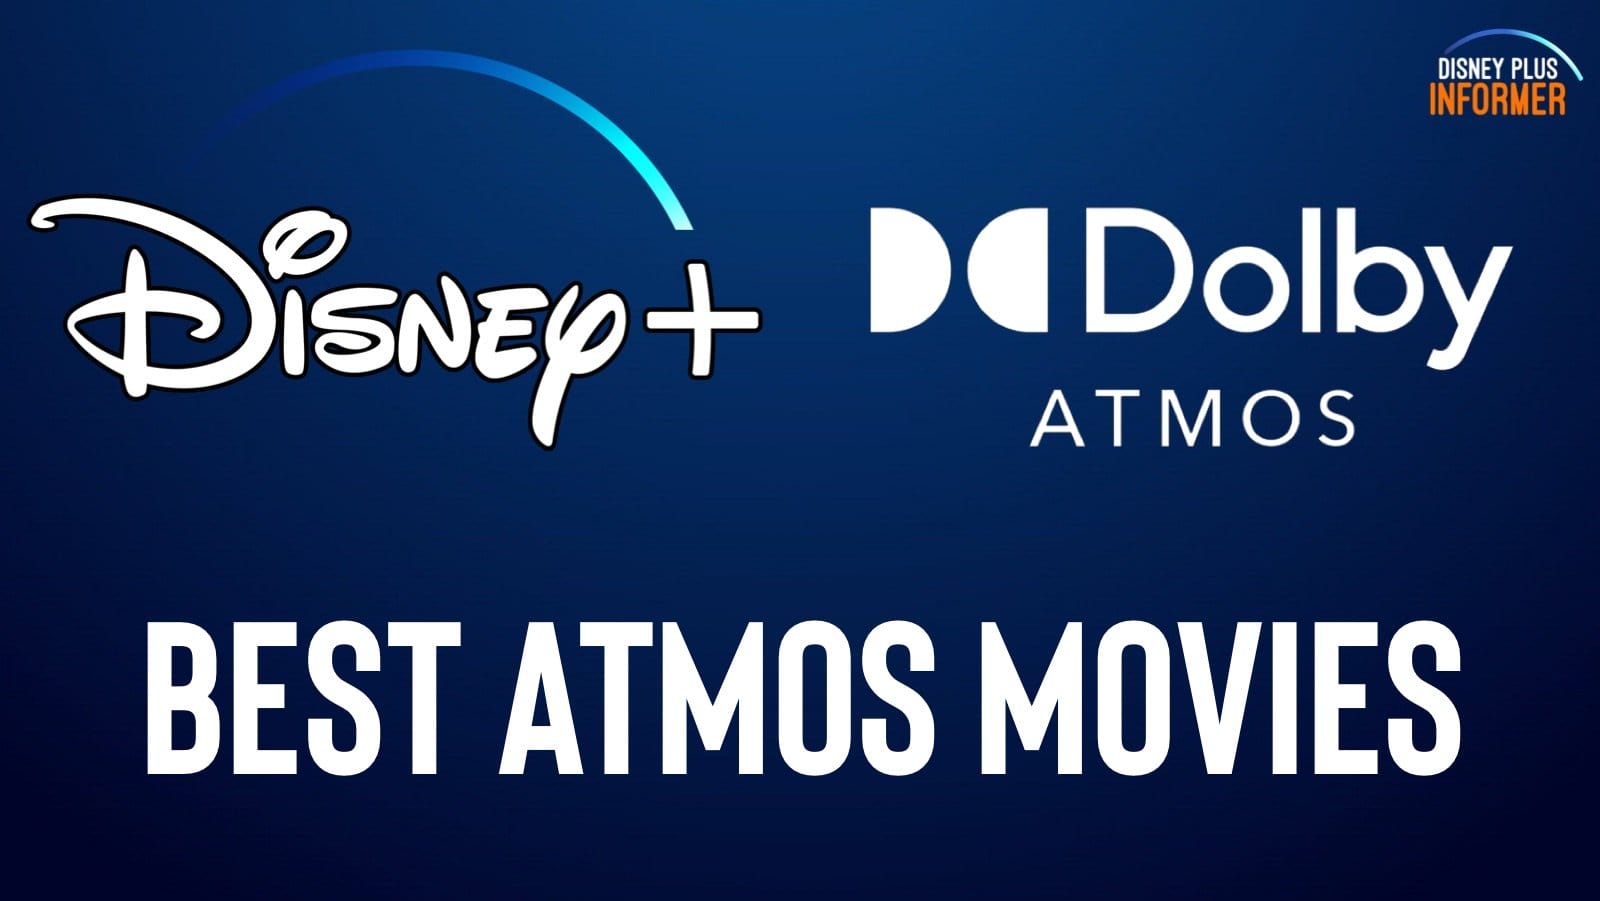 Best Atmos Movies On Disney Plus